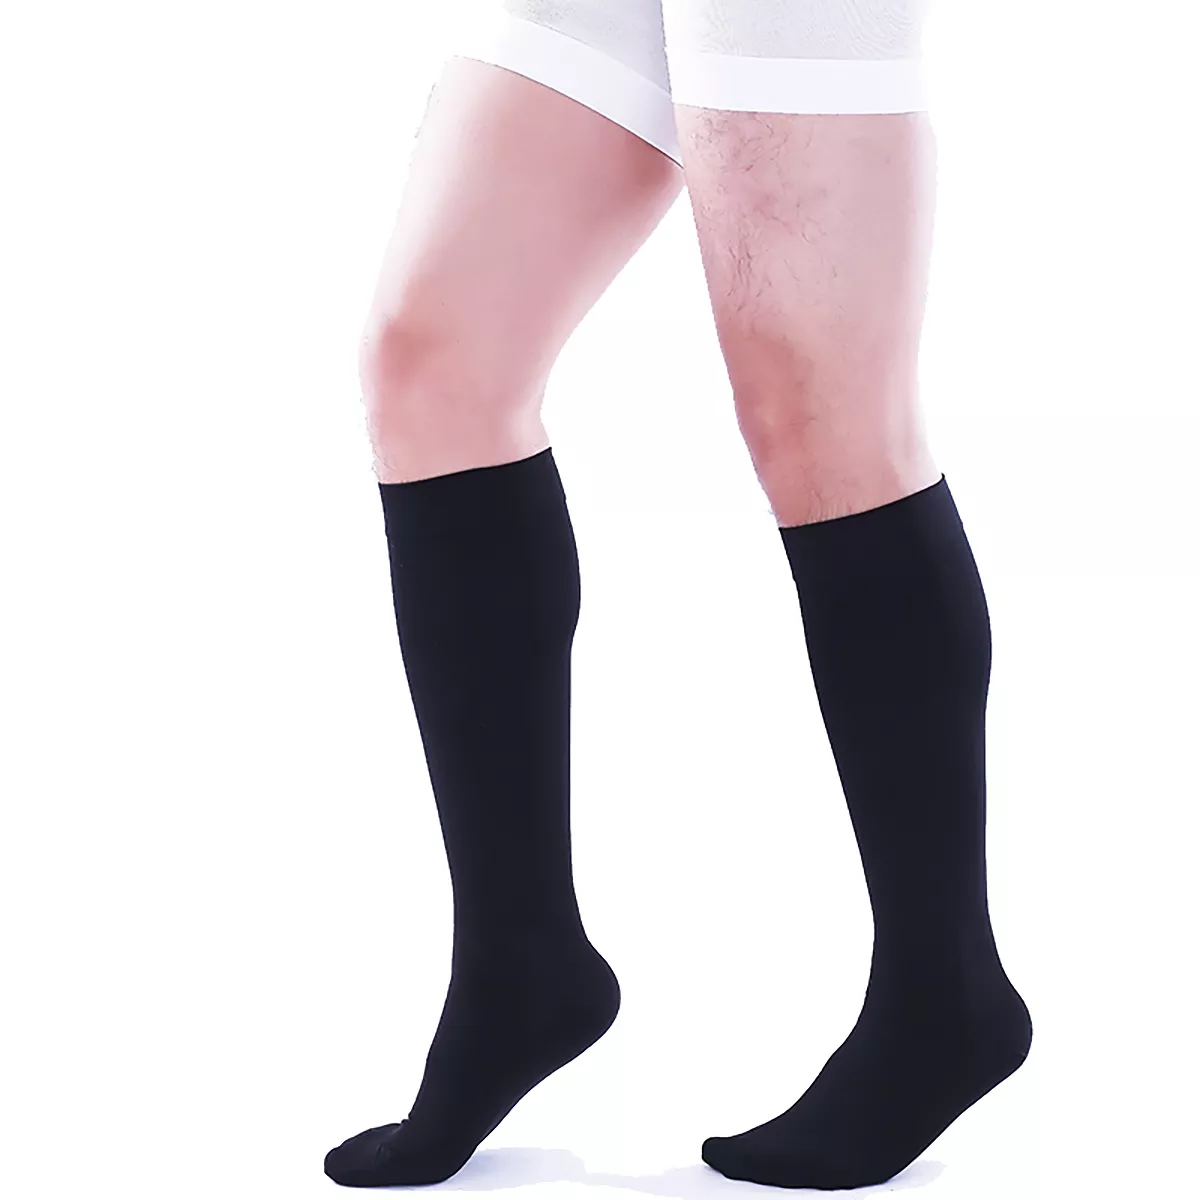 Varcoh ® 15-20 mmHg Men Knee High Closed Toe Compression Socks Black